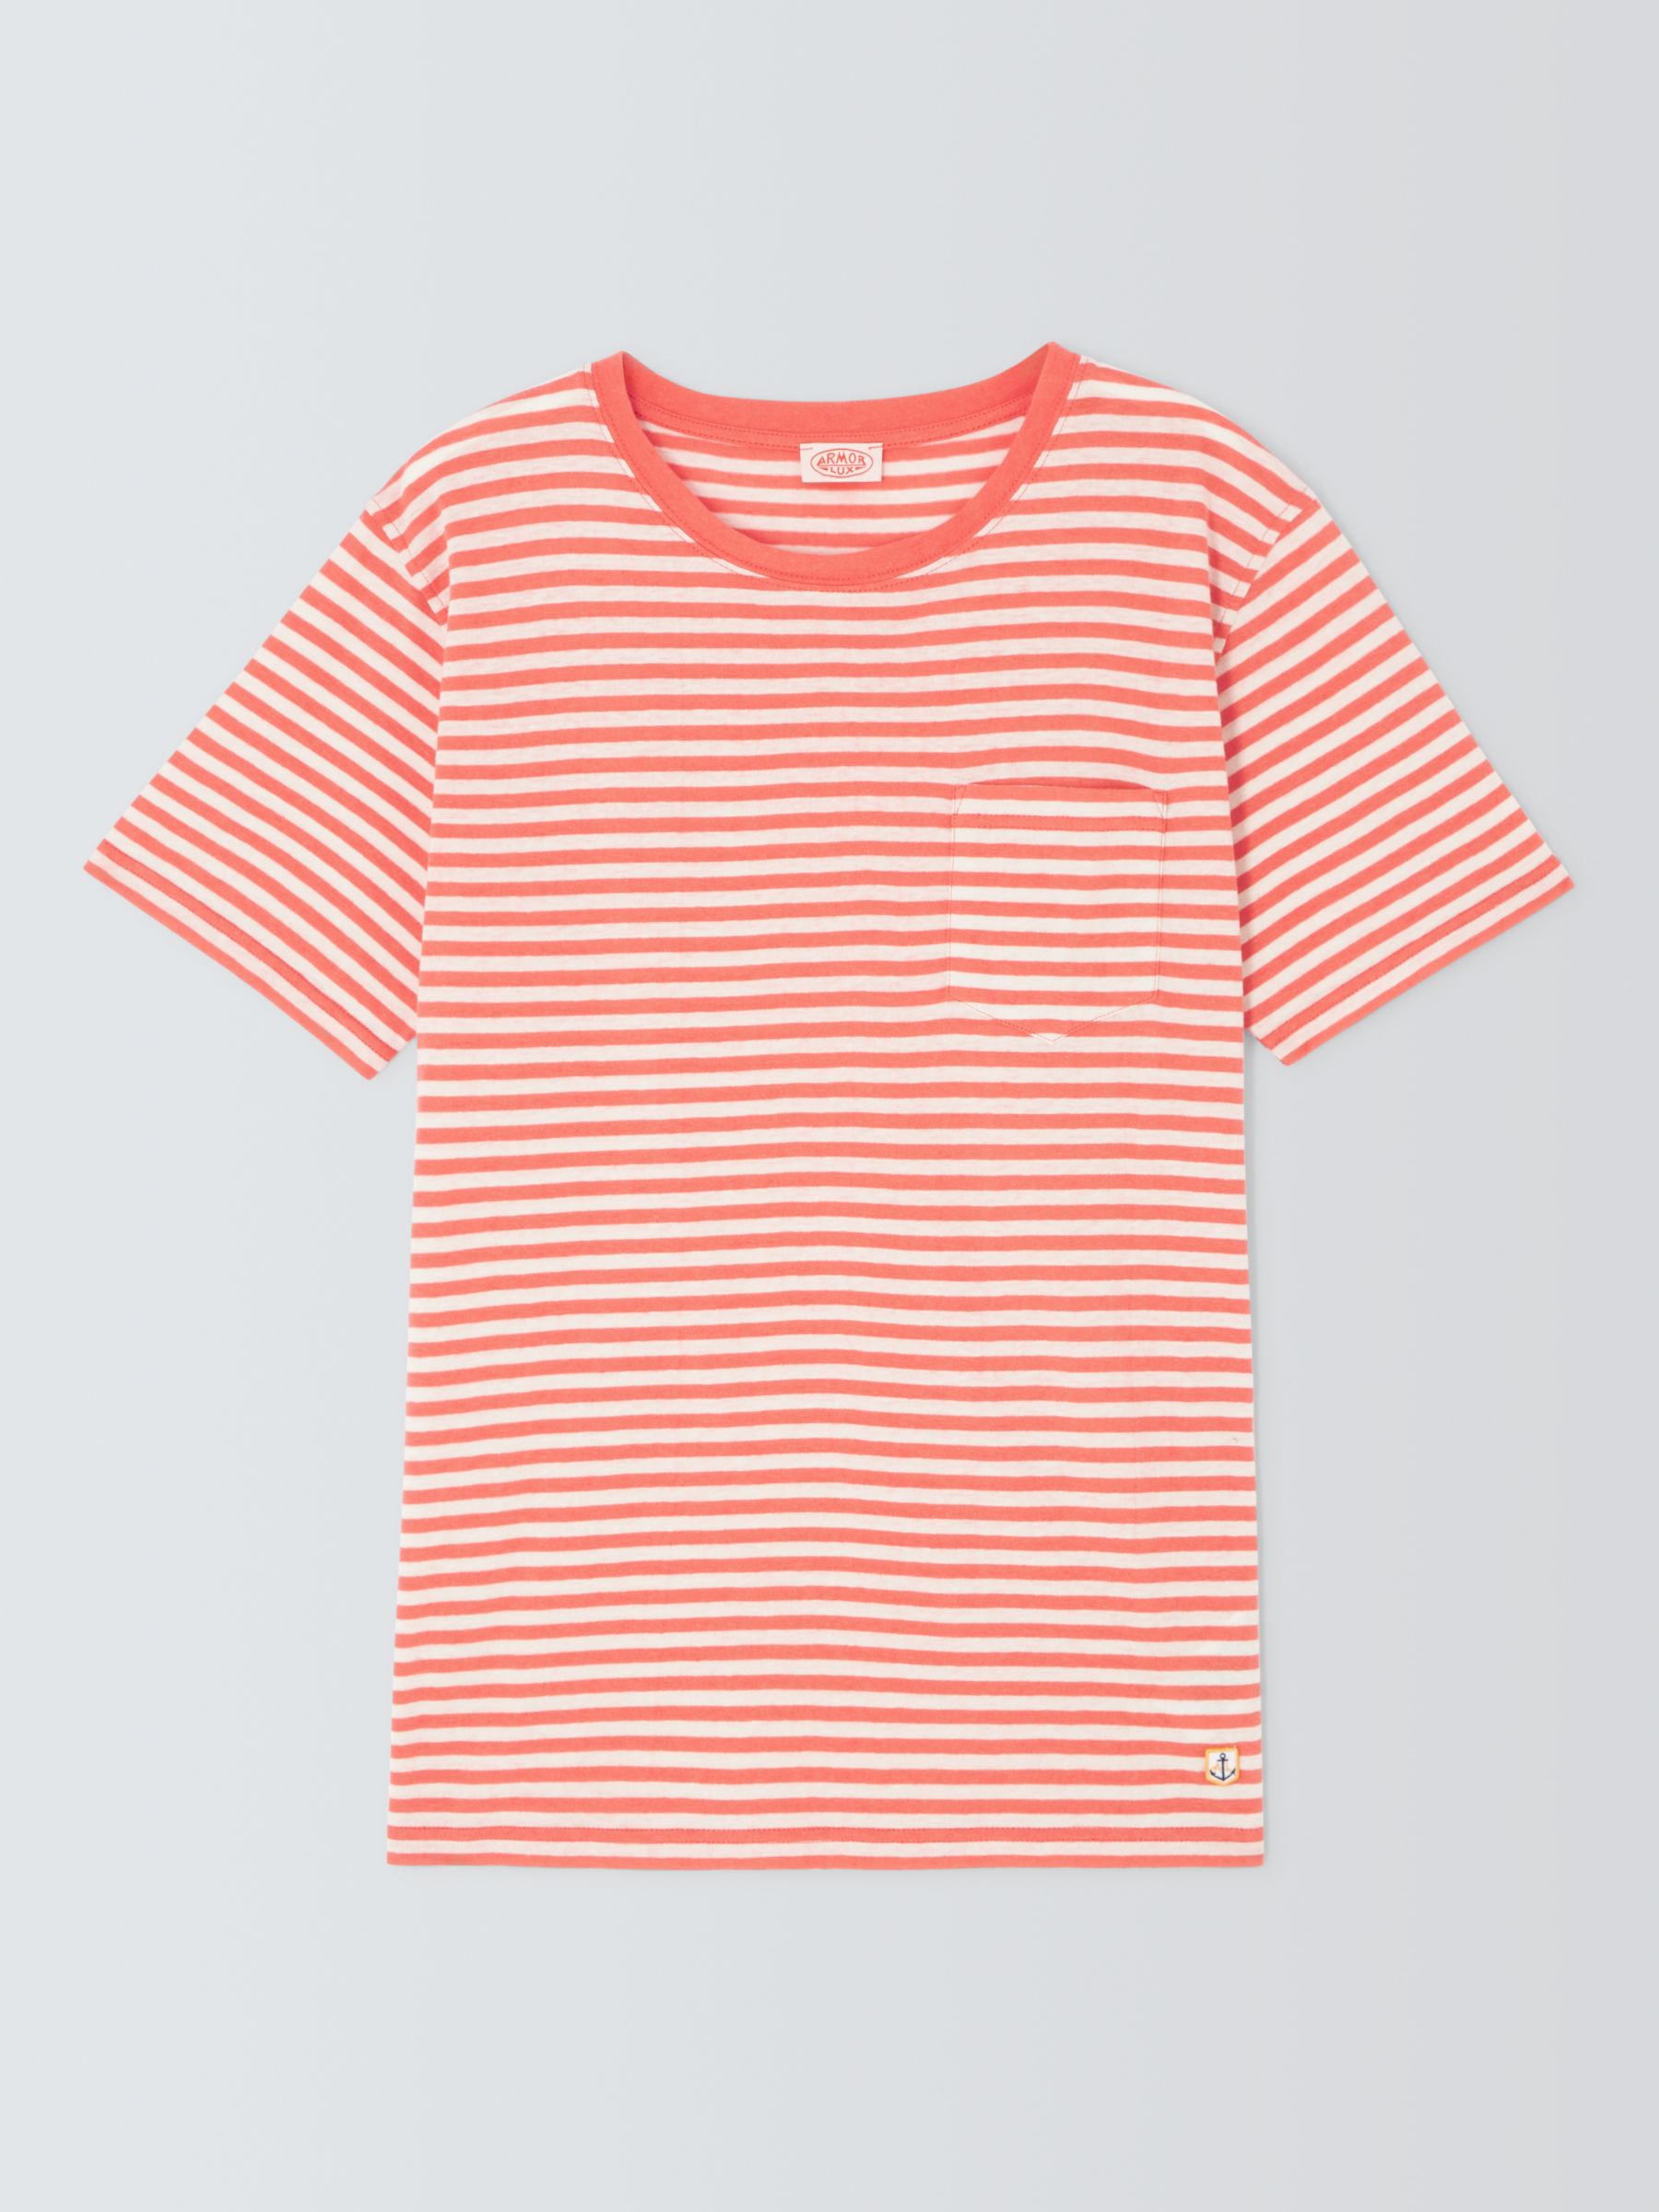 Armor Lux MC Heritage Pocket Stripe T-Shirt, Coral/White, S